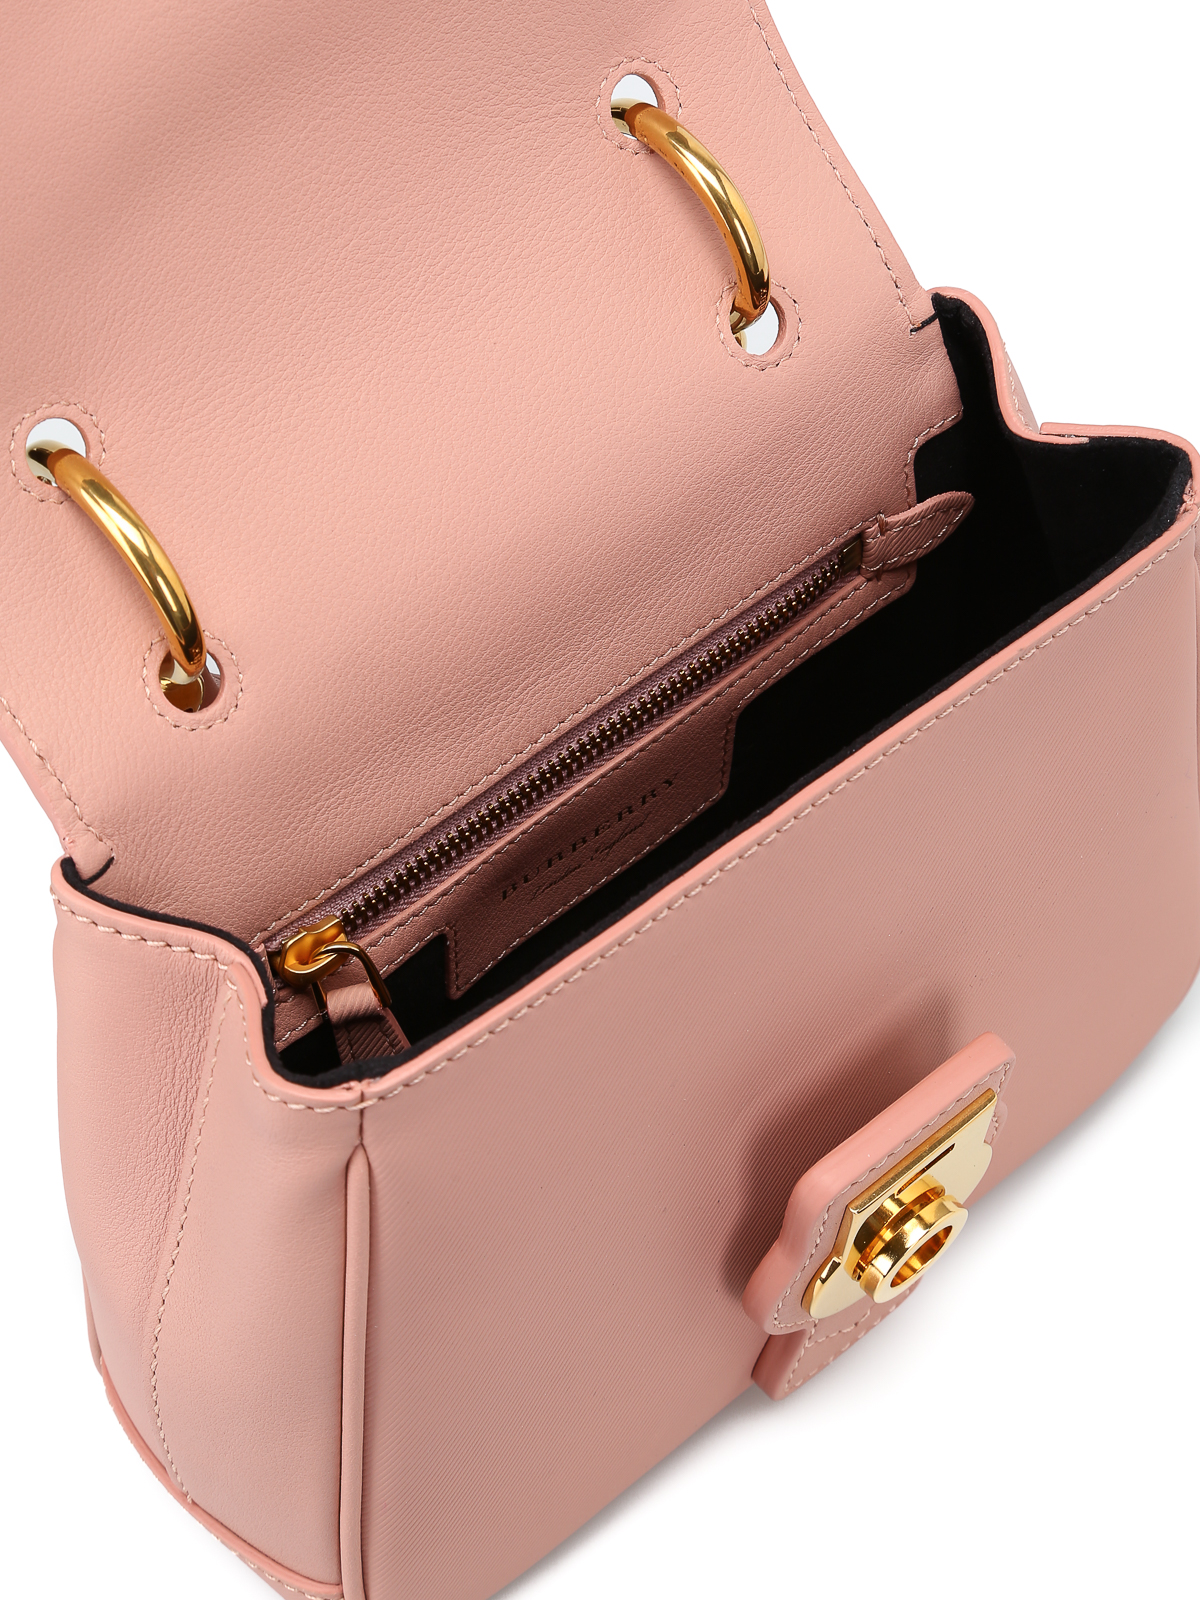 BURBERRY Trench Calfskin Mini DK88 Top Handle Bag Light Pink 1295854